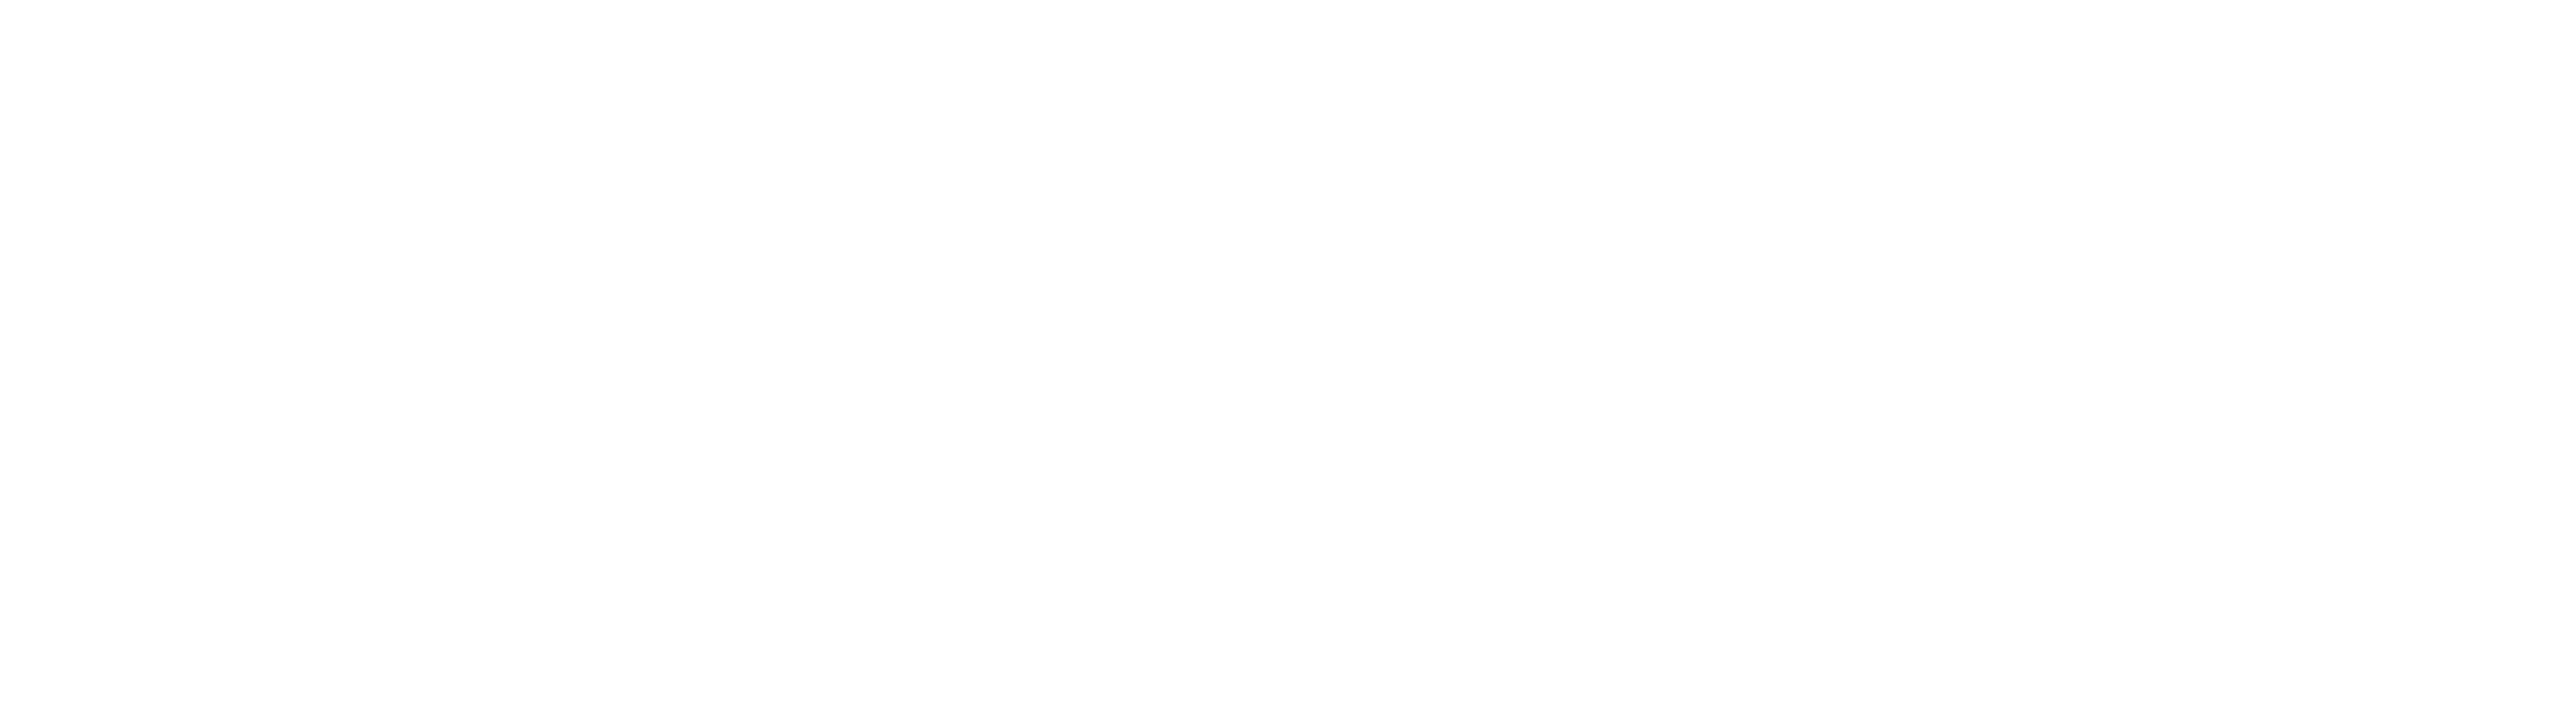 Utku Kük – Web Development, Digital Marketing